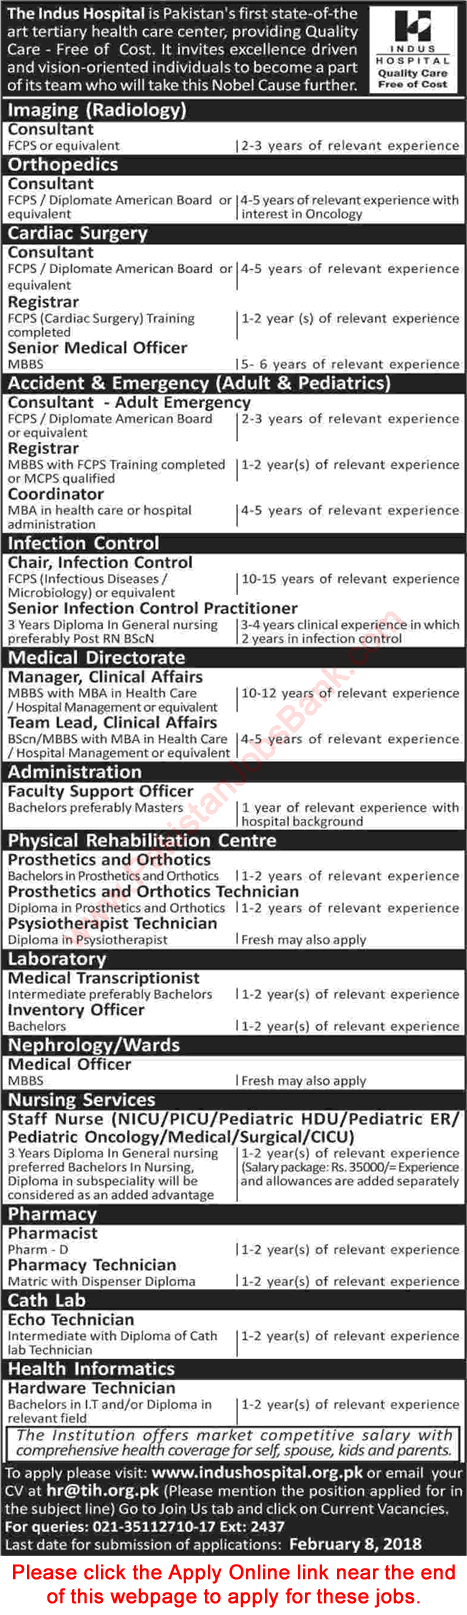 Indus Hospital Karachi Jobs 2018 January Apply Online Nurses, Medical Technicians, Consultants & Others Latest